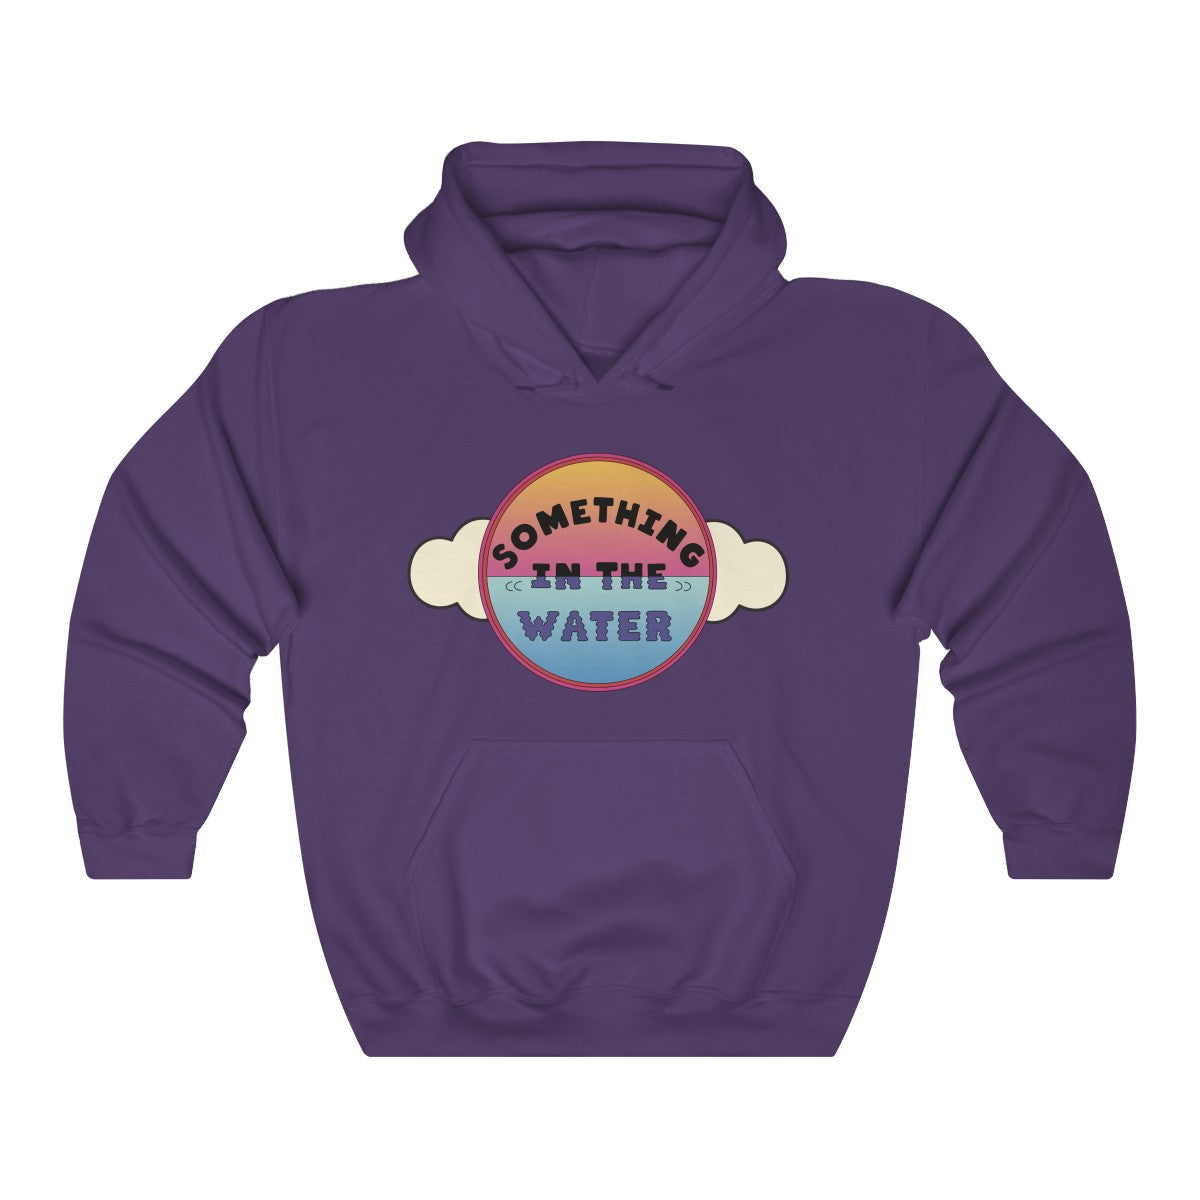 Something in the water Unisex Heavy Blend Hooded Sweatshirt - Pharrell Williams festival merch inspired-Purple-S-Archethype